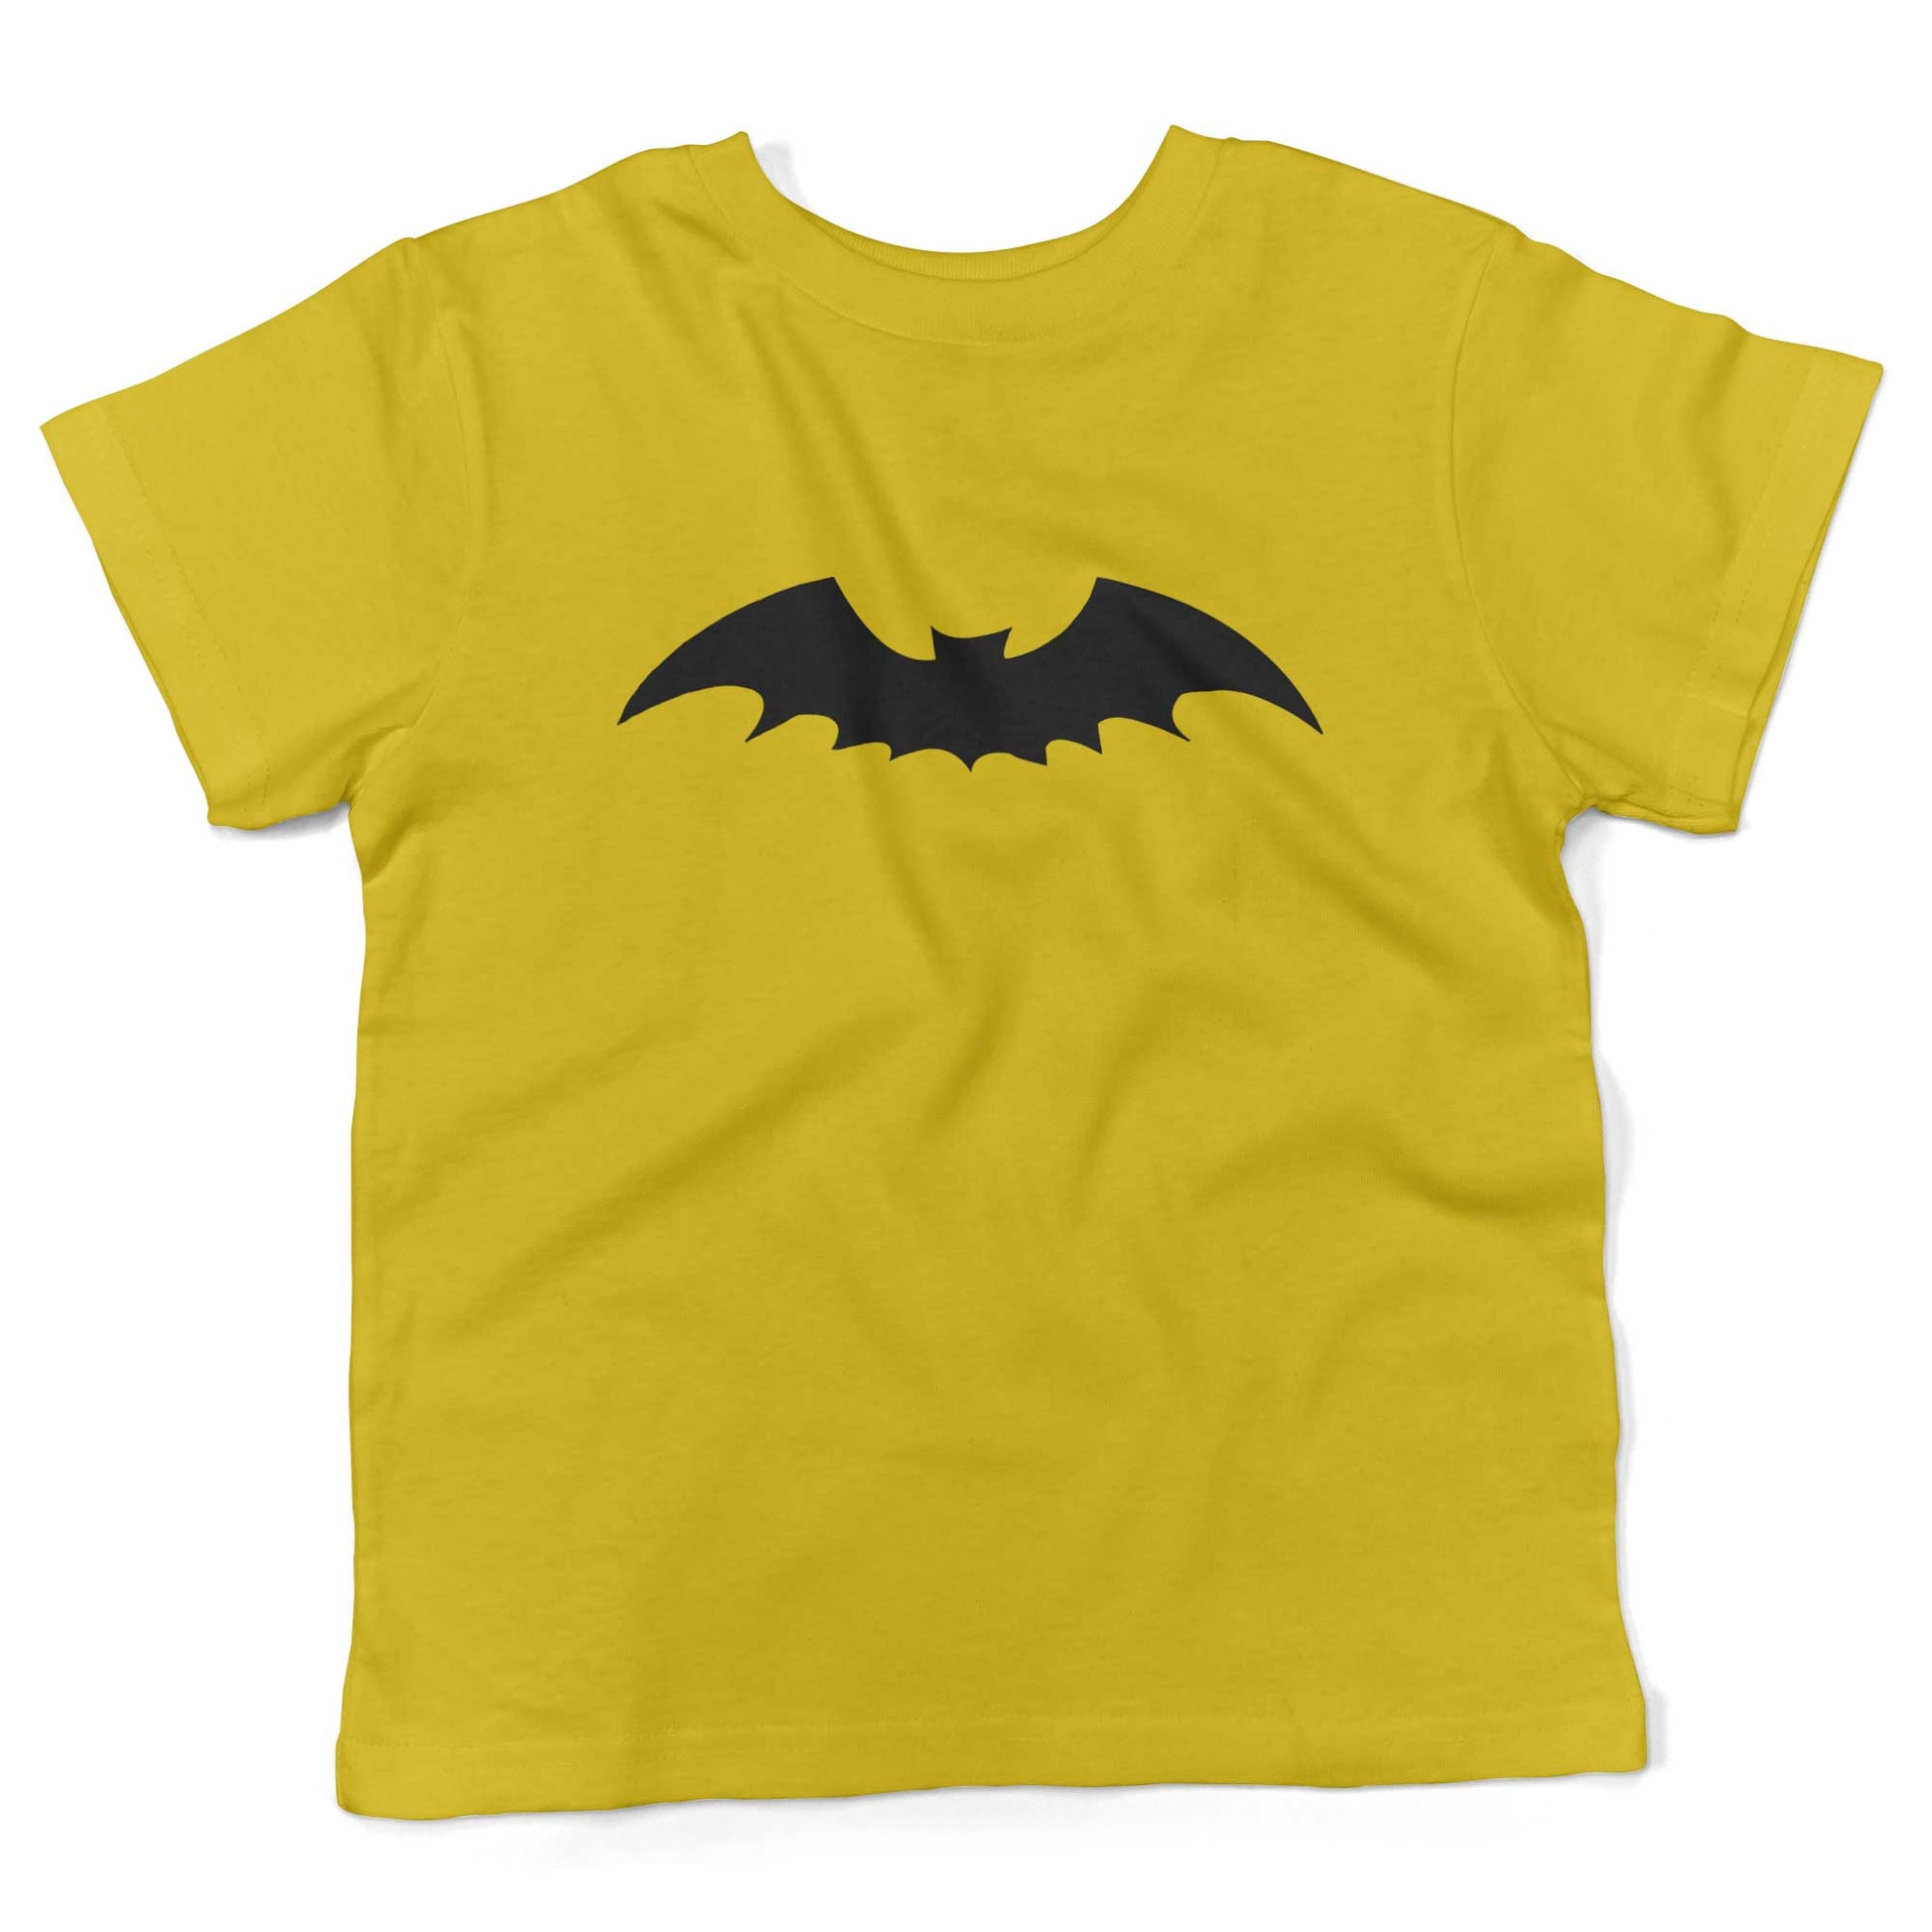 Gothic Bat Toddler Shirt-Sunshine Yellow-2T